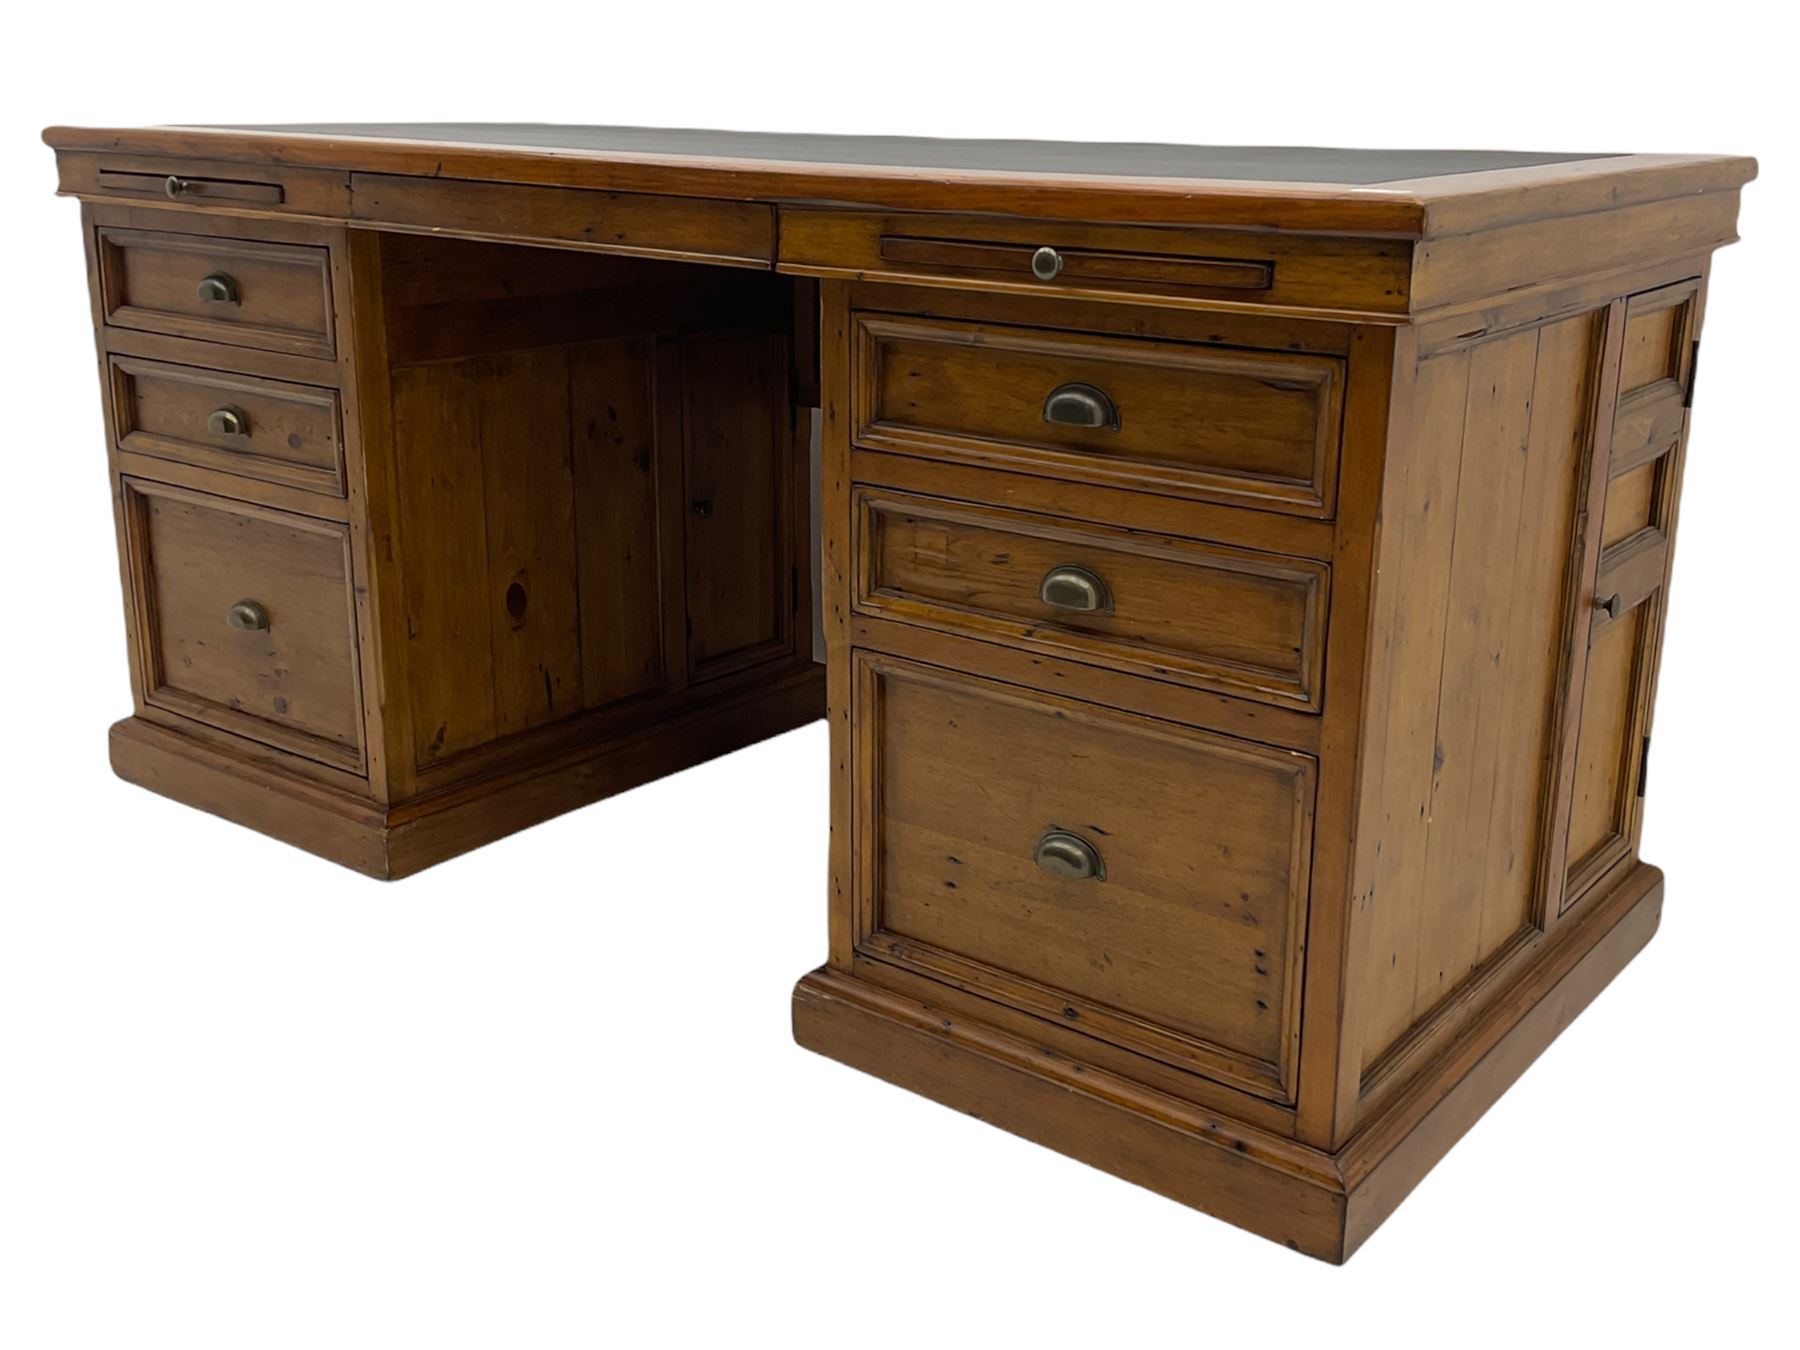 Barker & Stonehouse - Villiers reclaimed eastern pine twin pedestal desk - Image 3 of 8